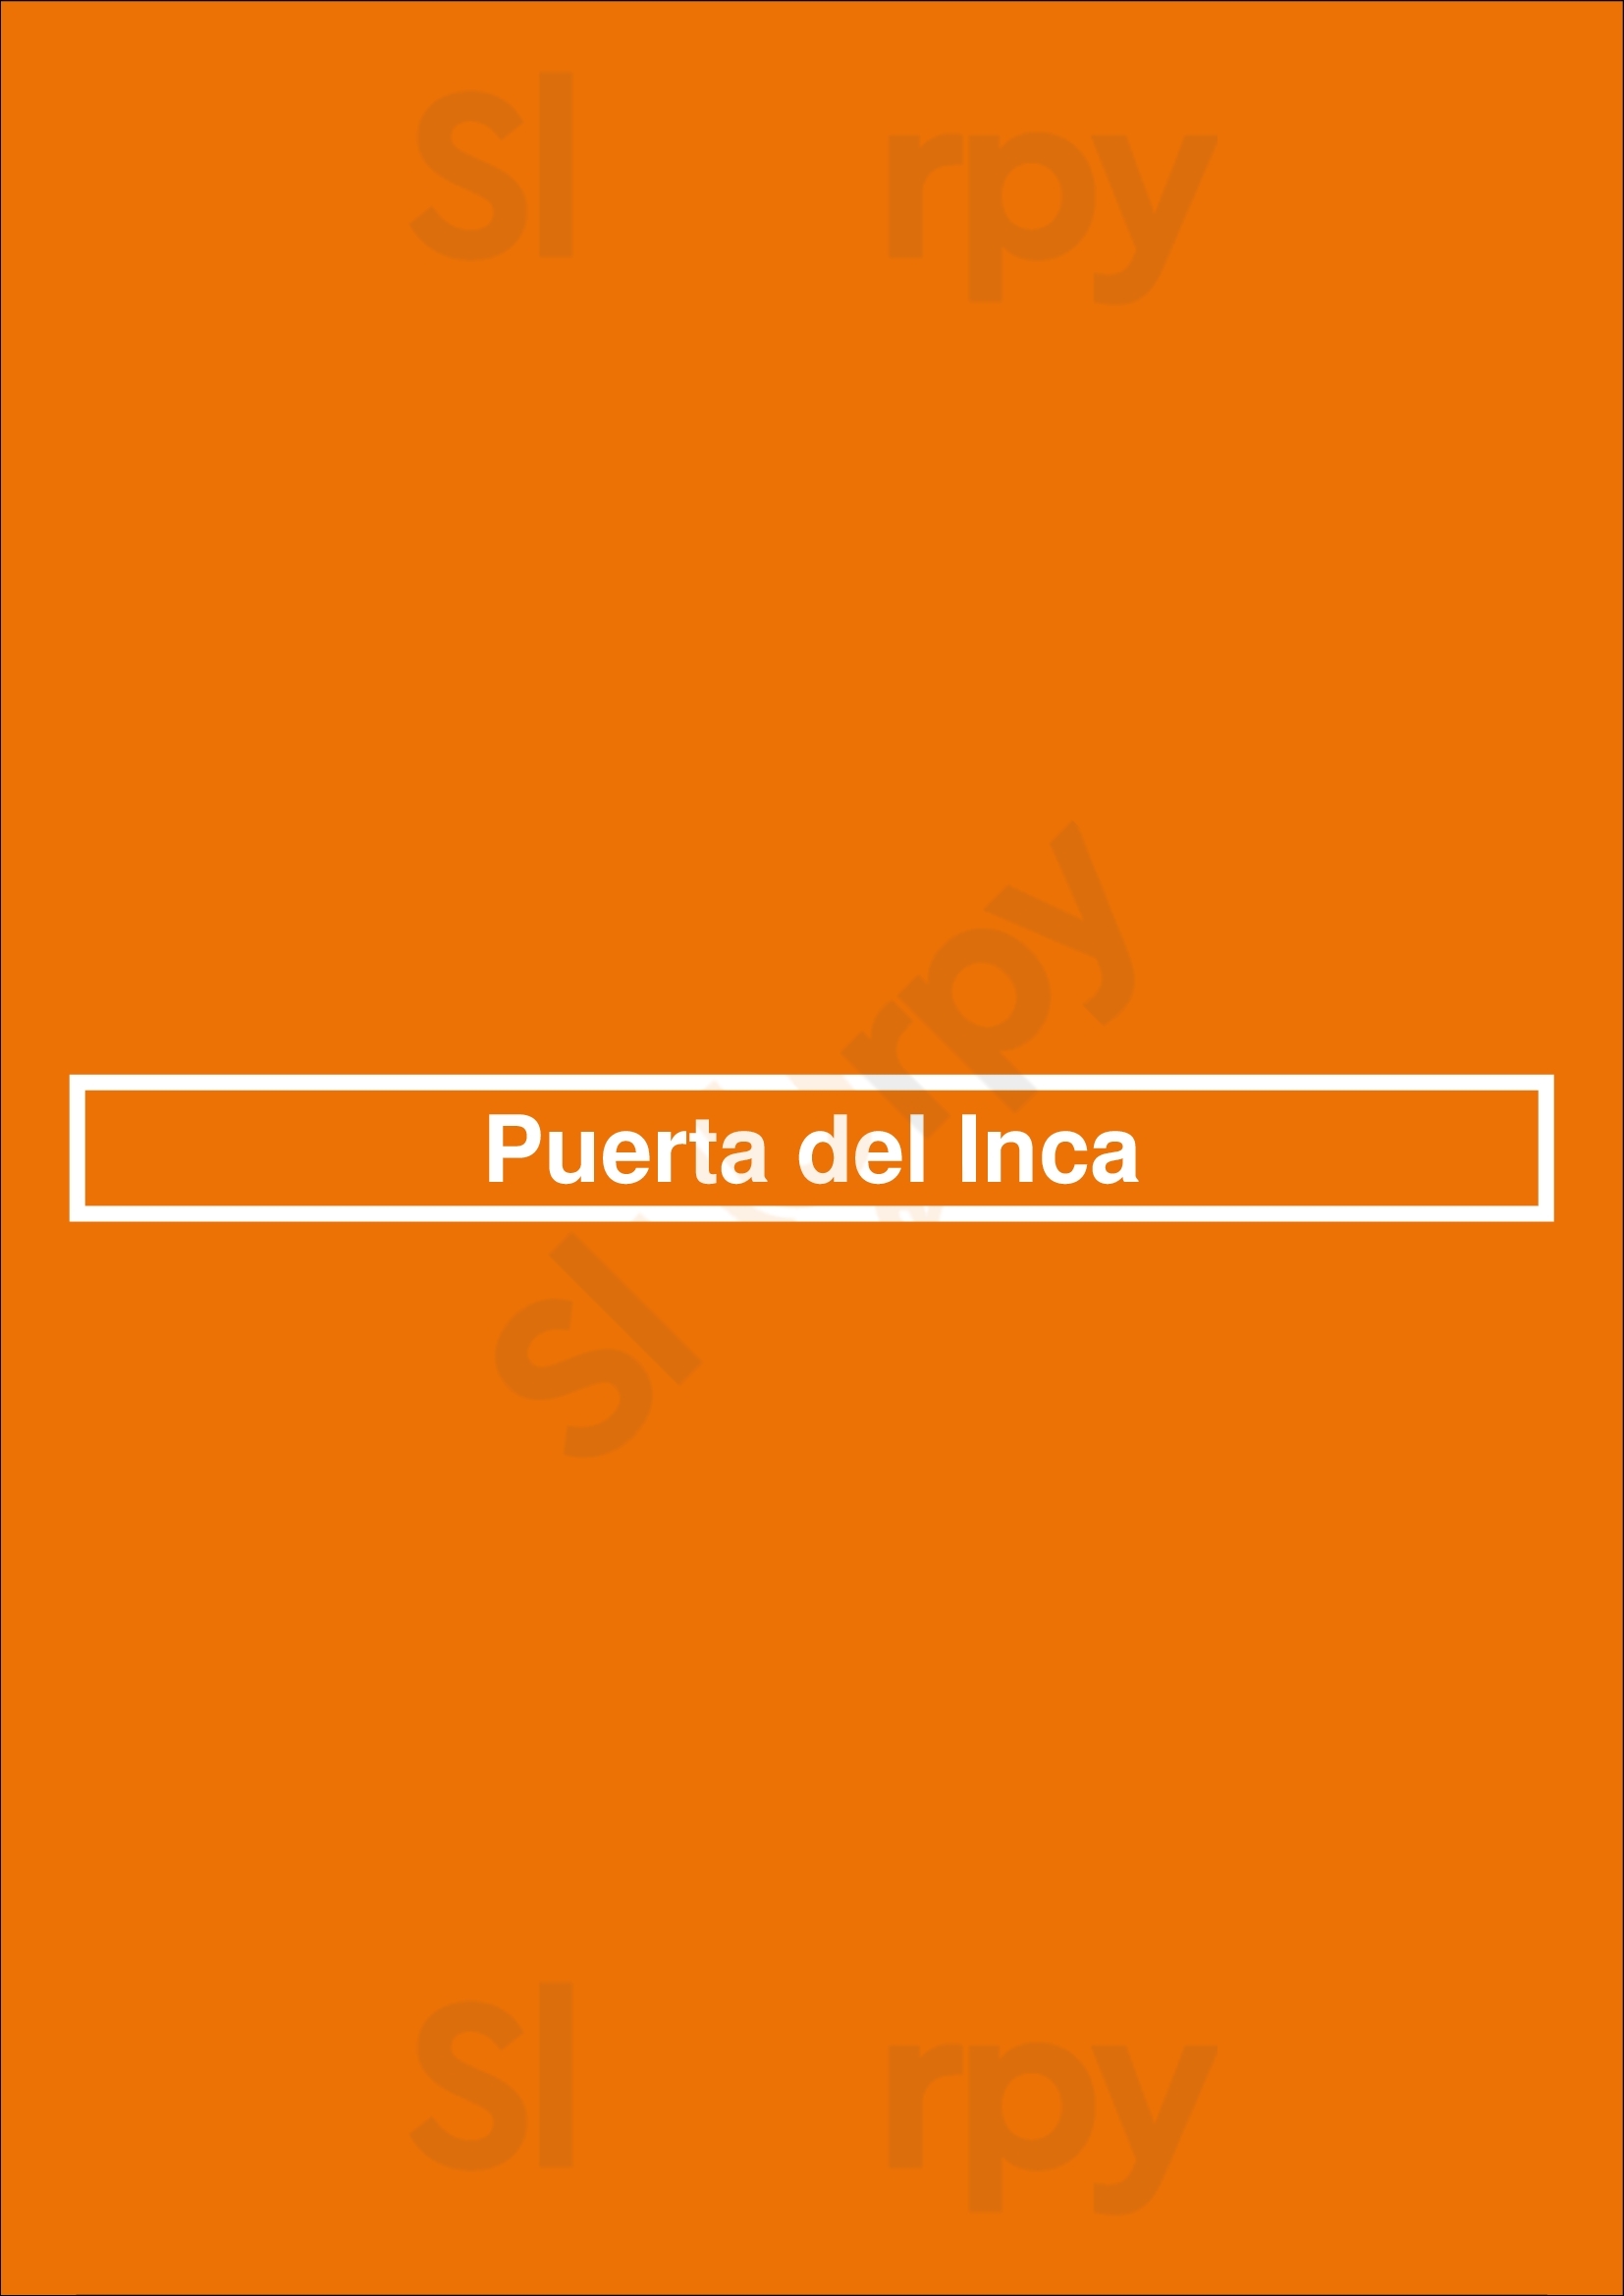 Puerta Del Inca Buenos Aires Menu - 1